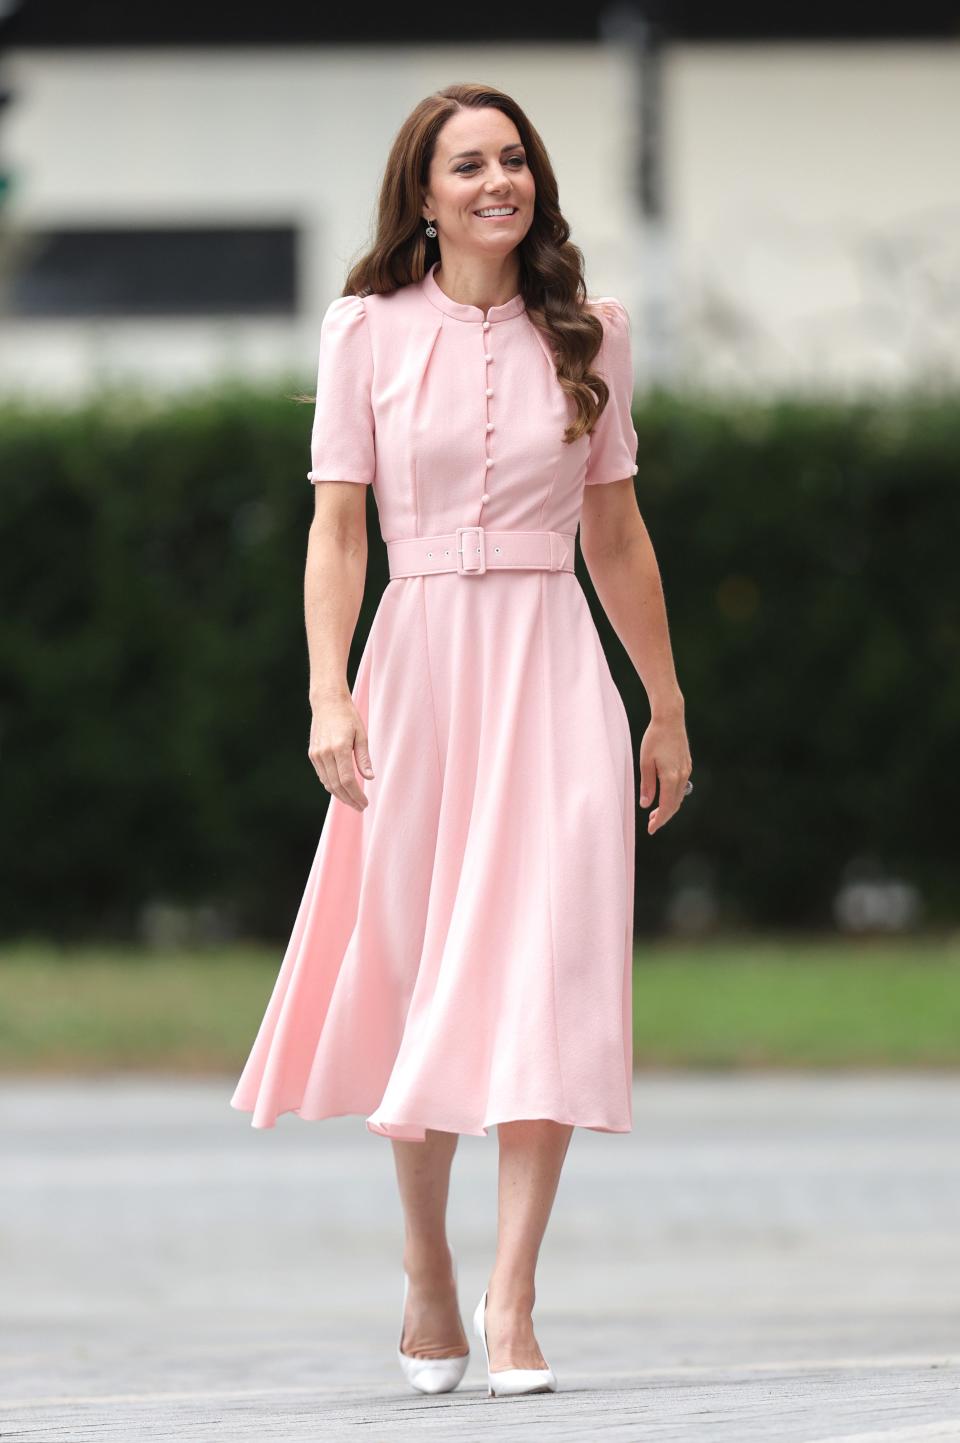 Kate Middleton wears a pale pink dress